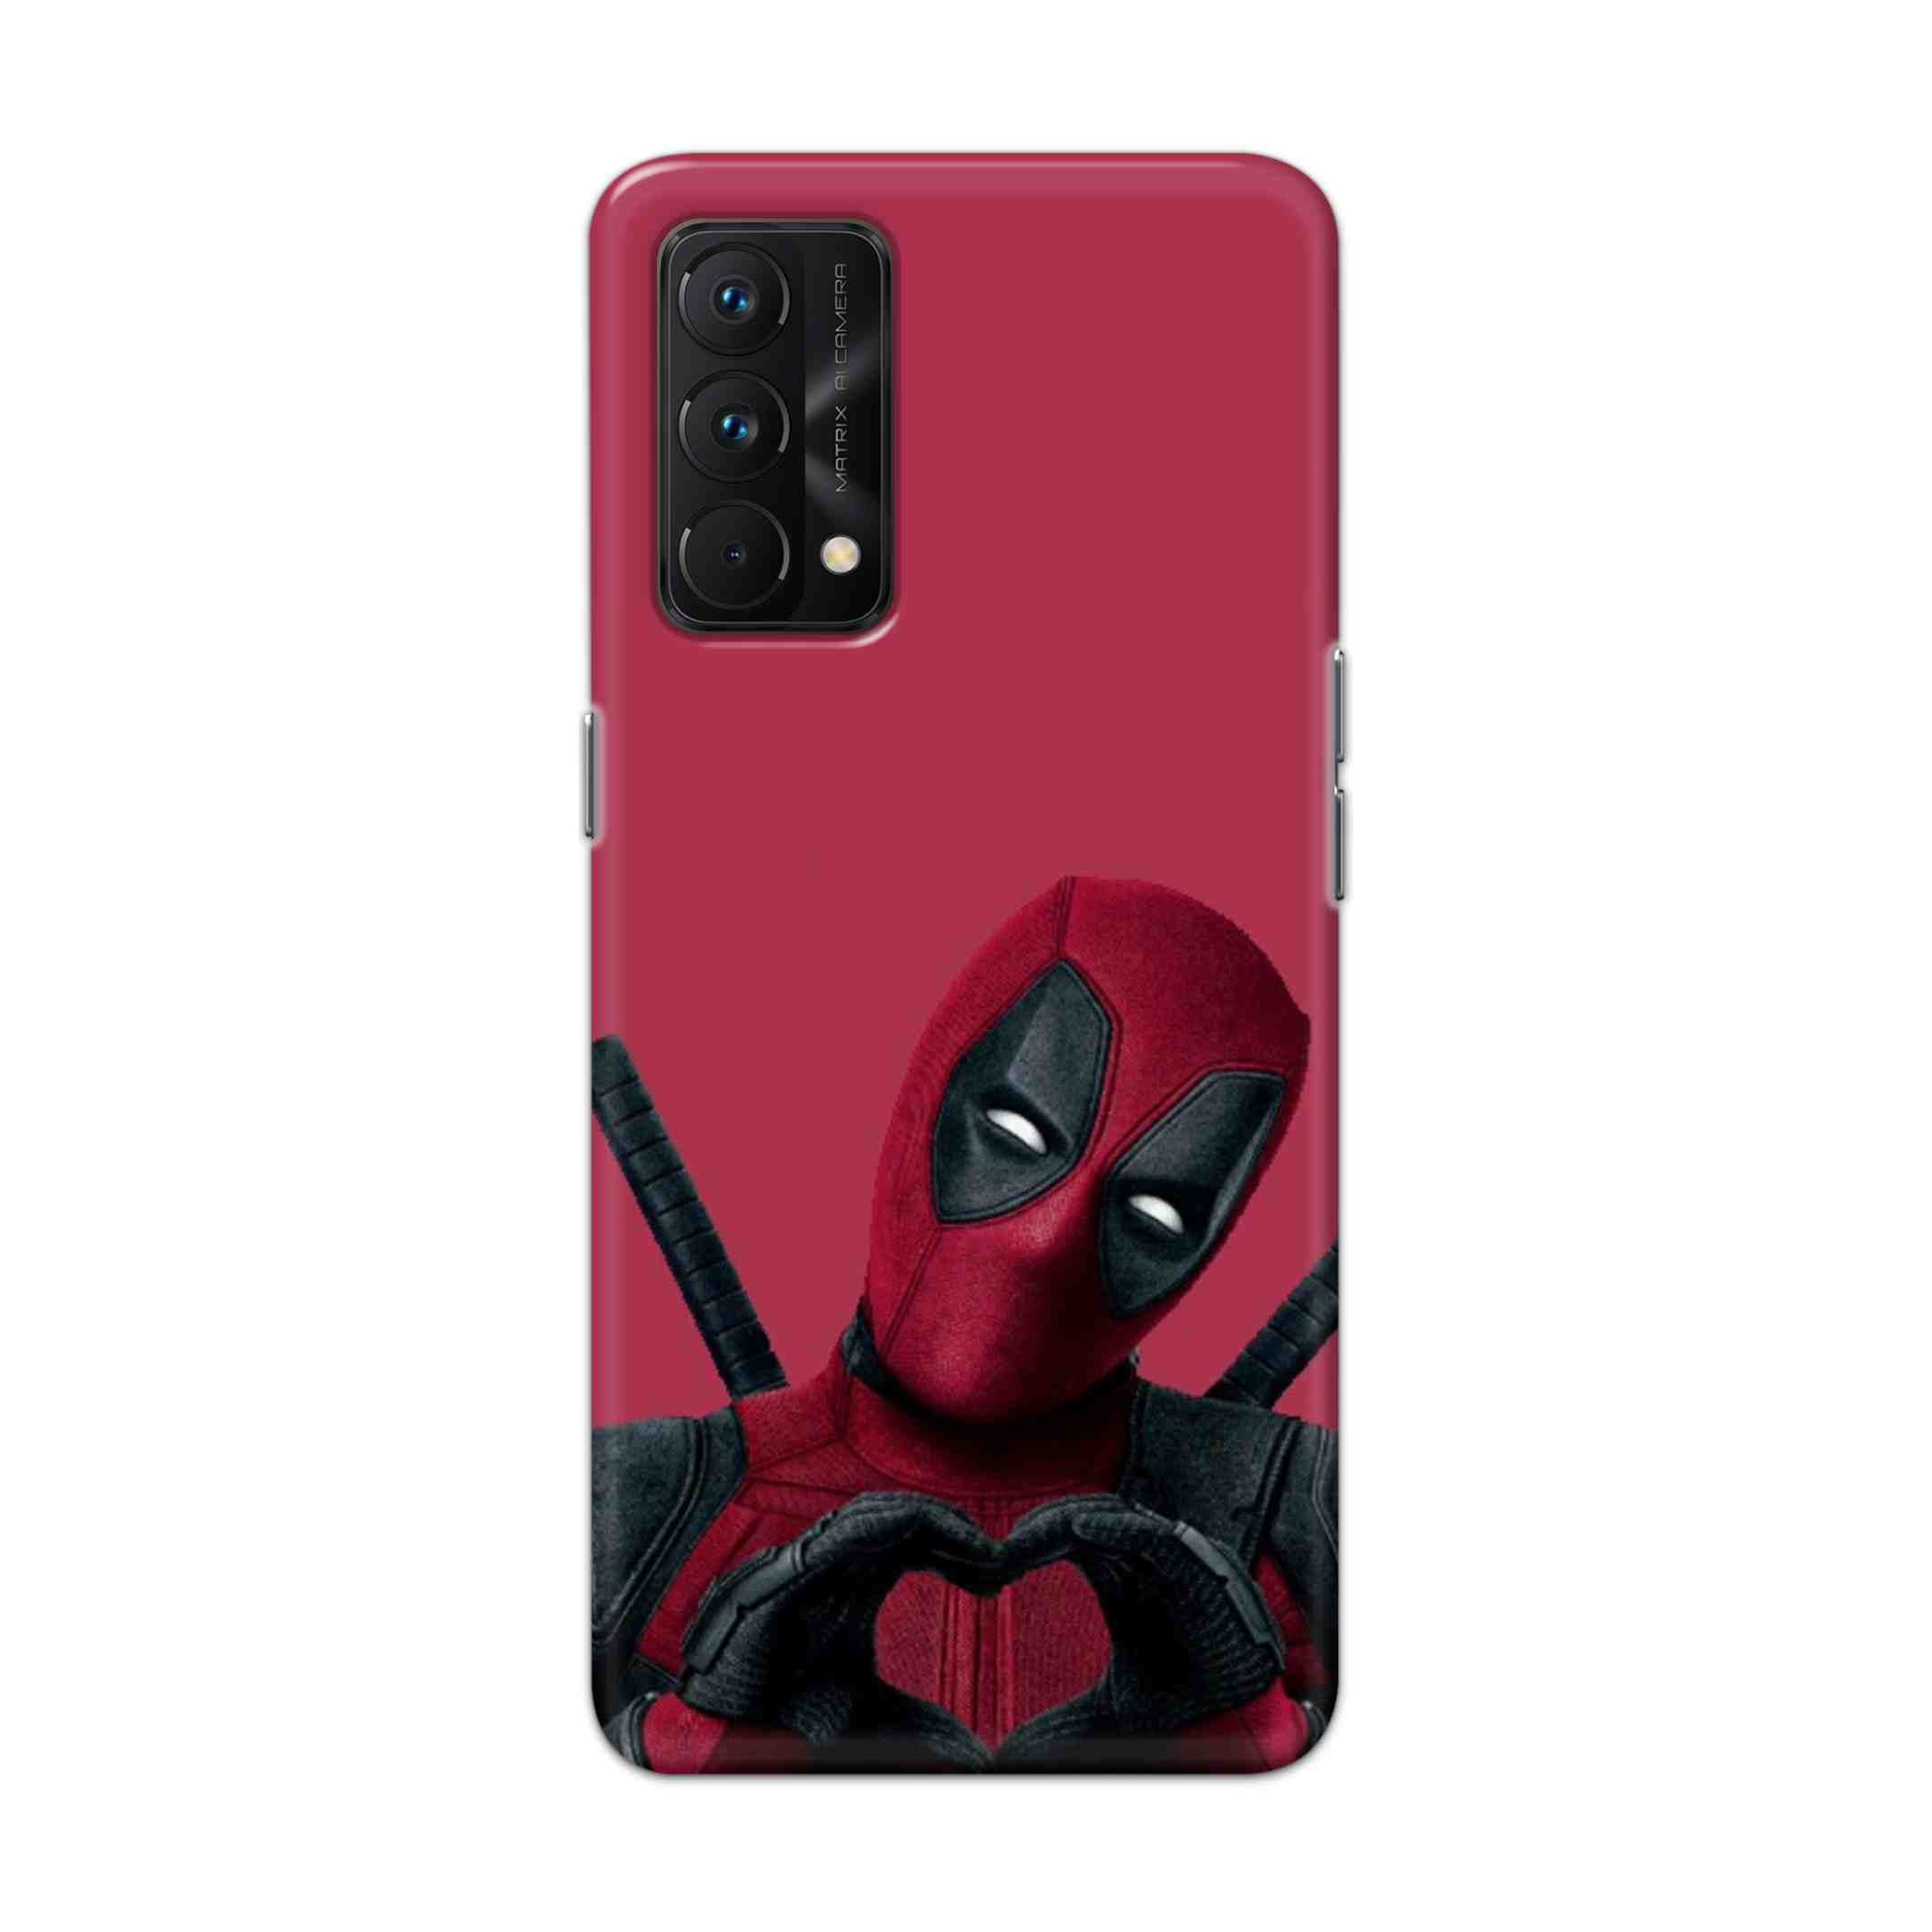 Buy Deadpool Heart Hard Back Mobile Phone Case Cover For Realme GT Master Online